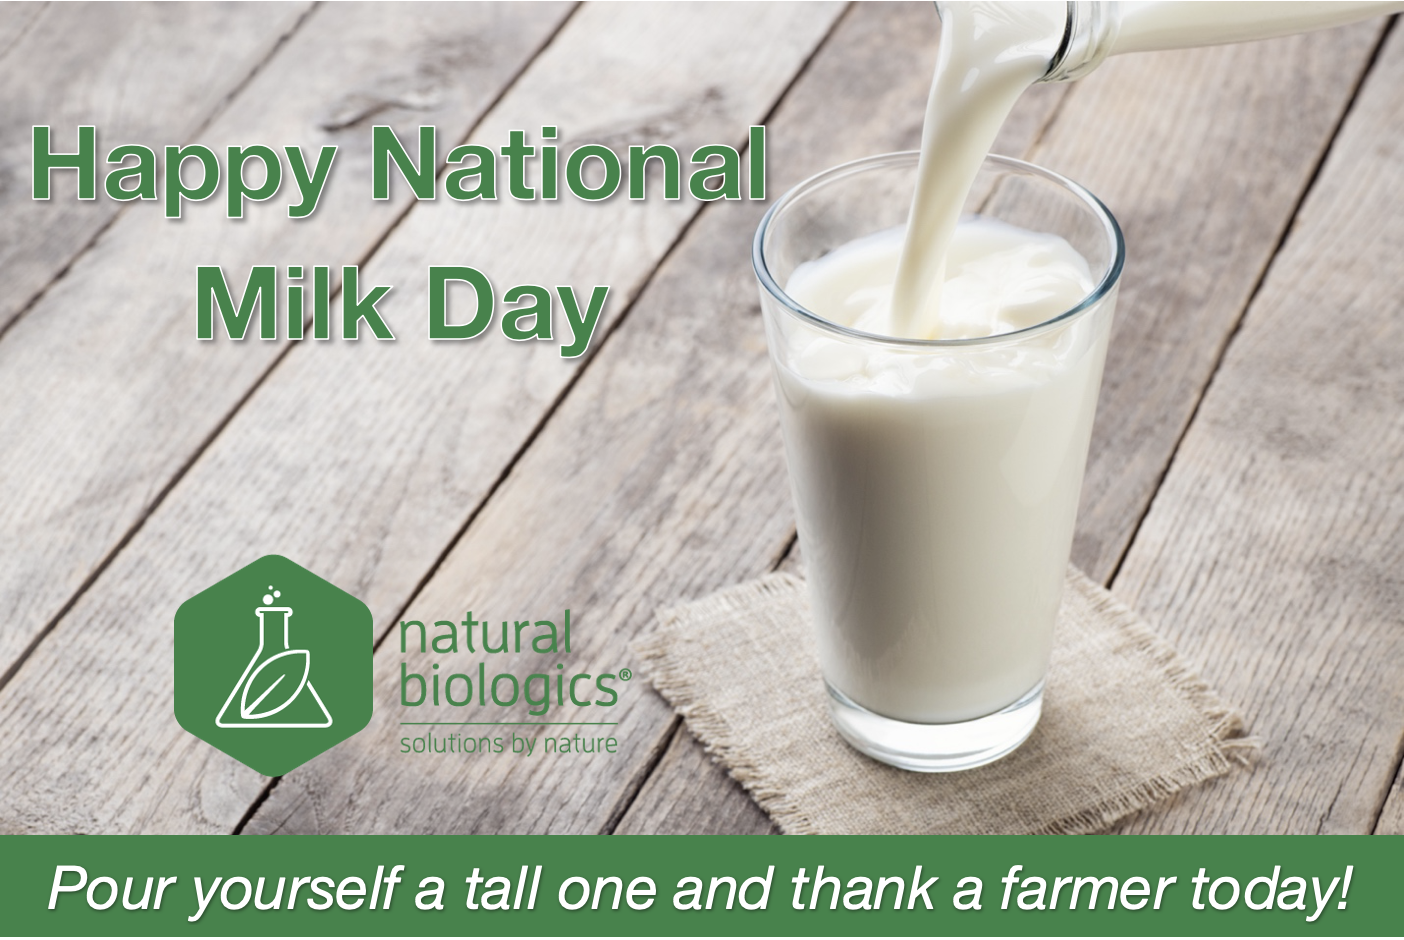 Happy National Milk Day!